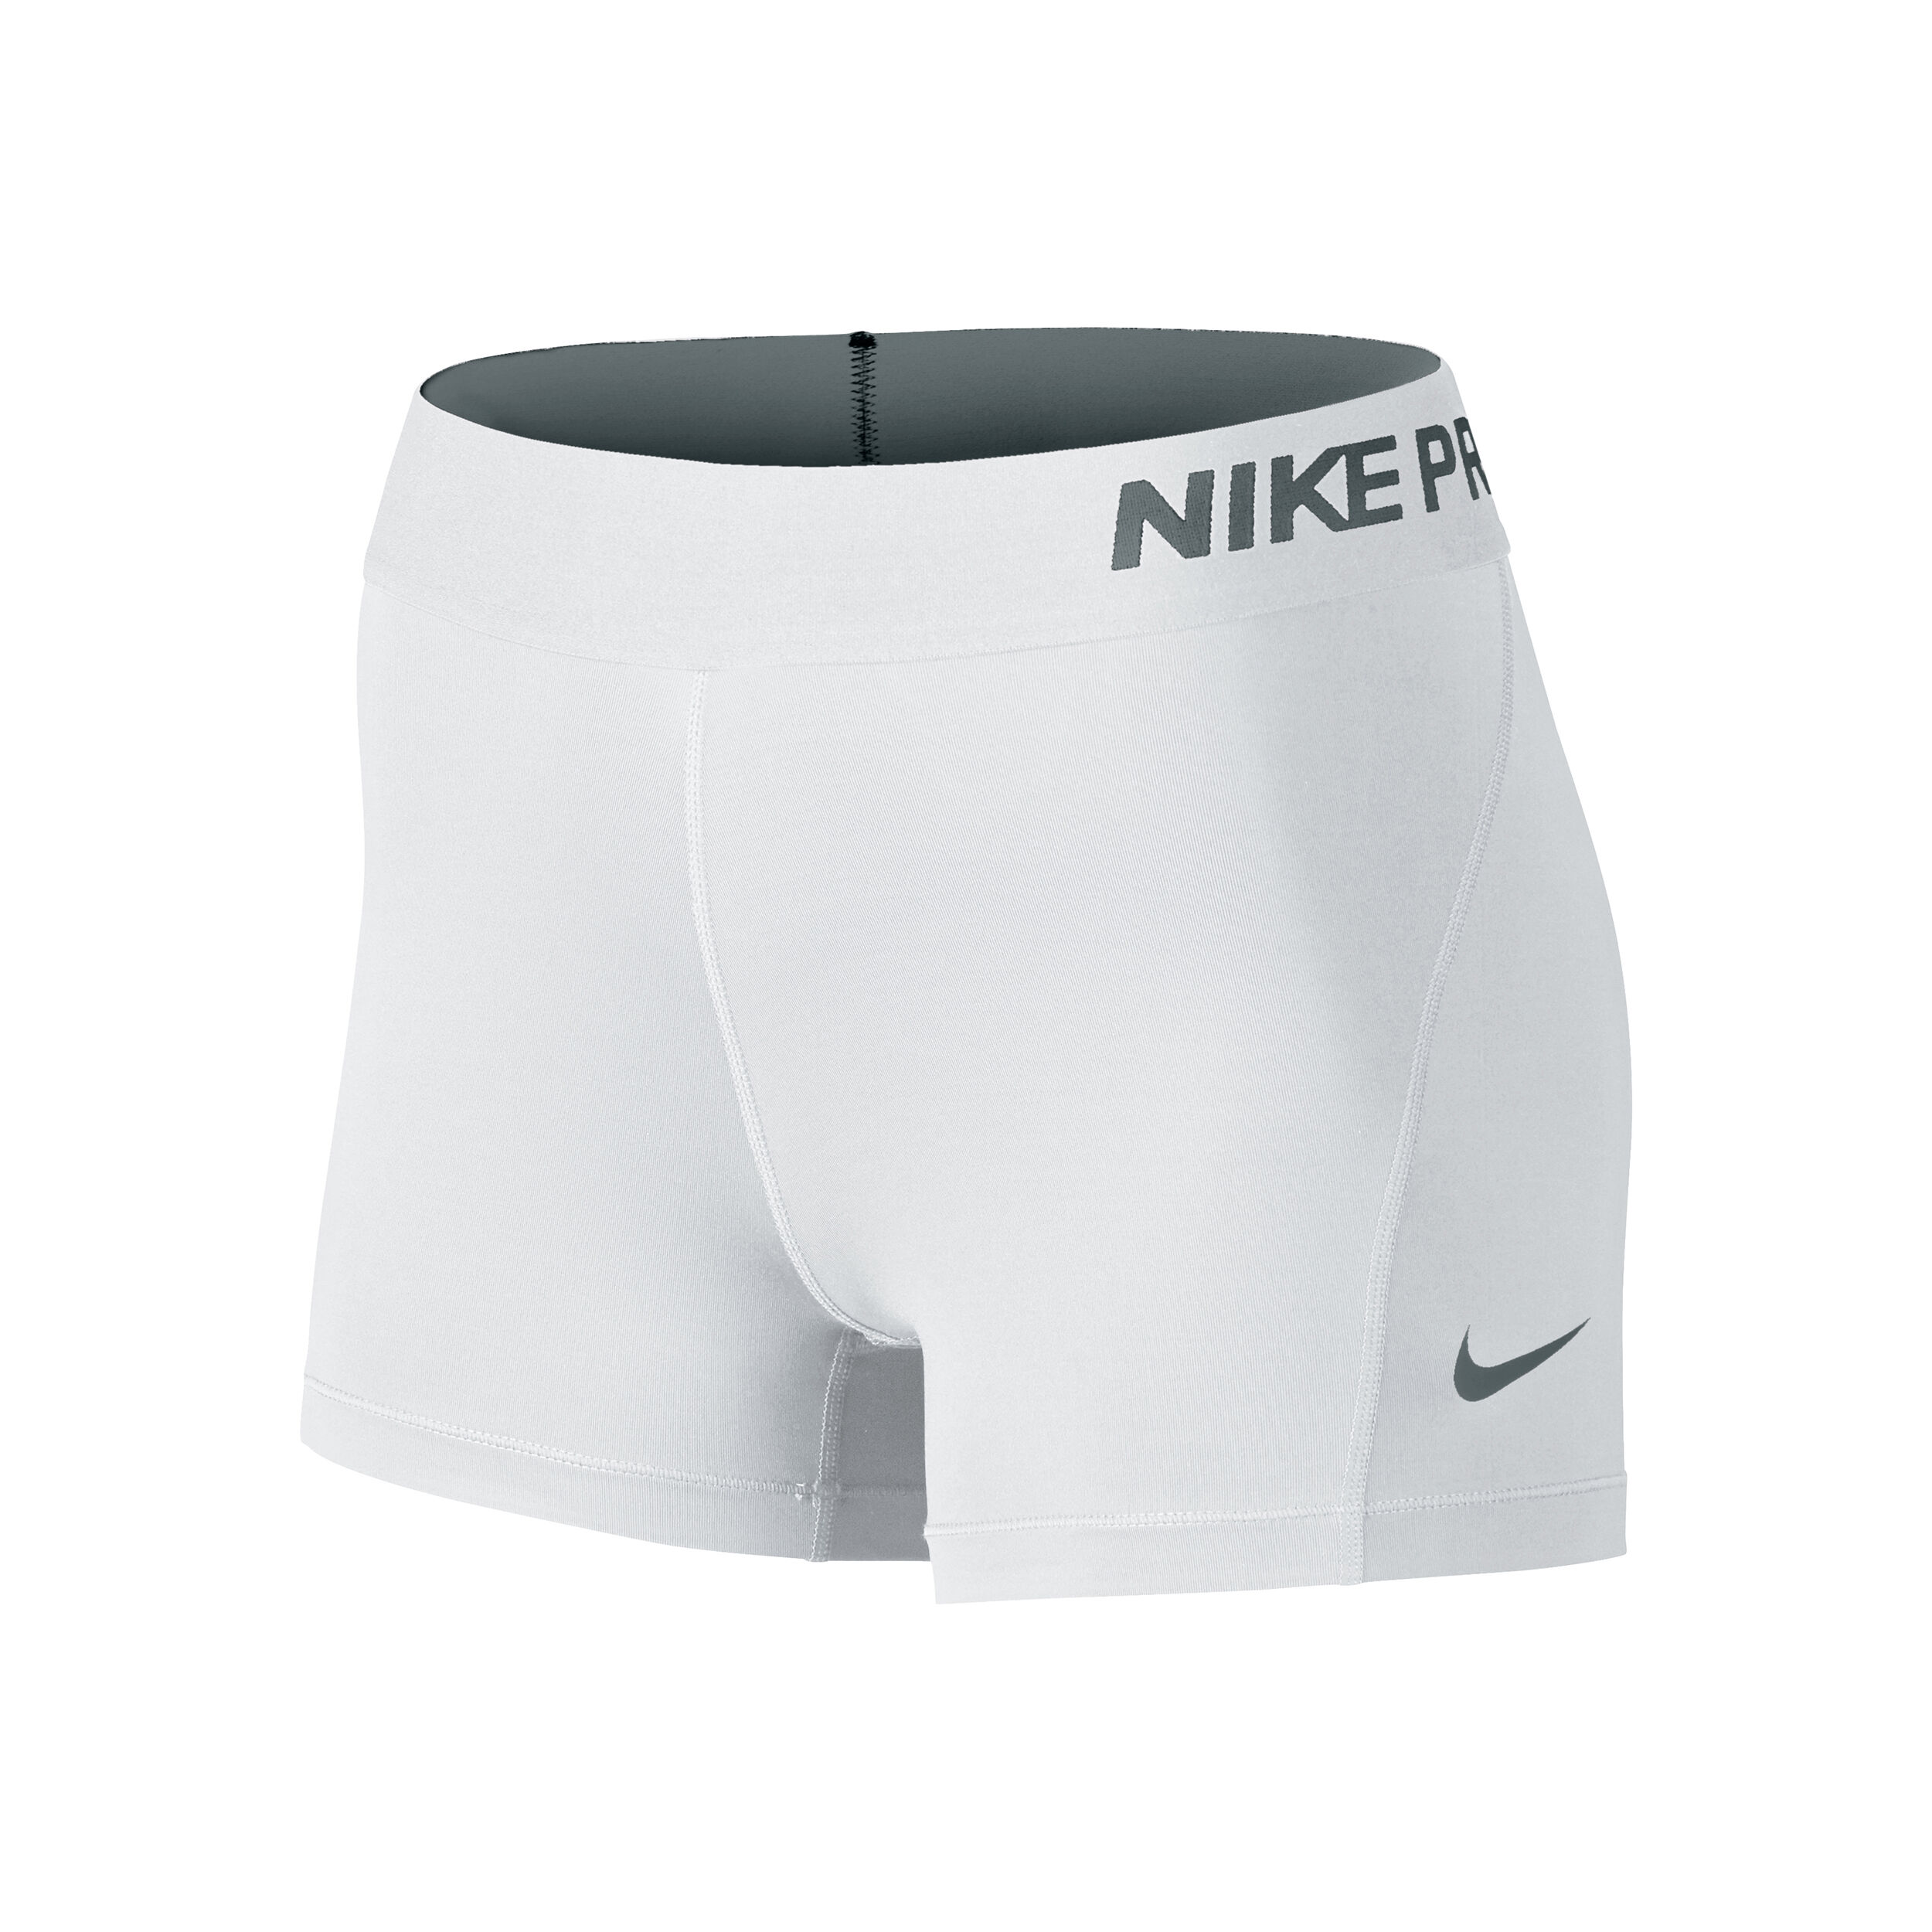 nike pro shorts women white